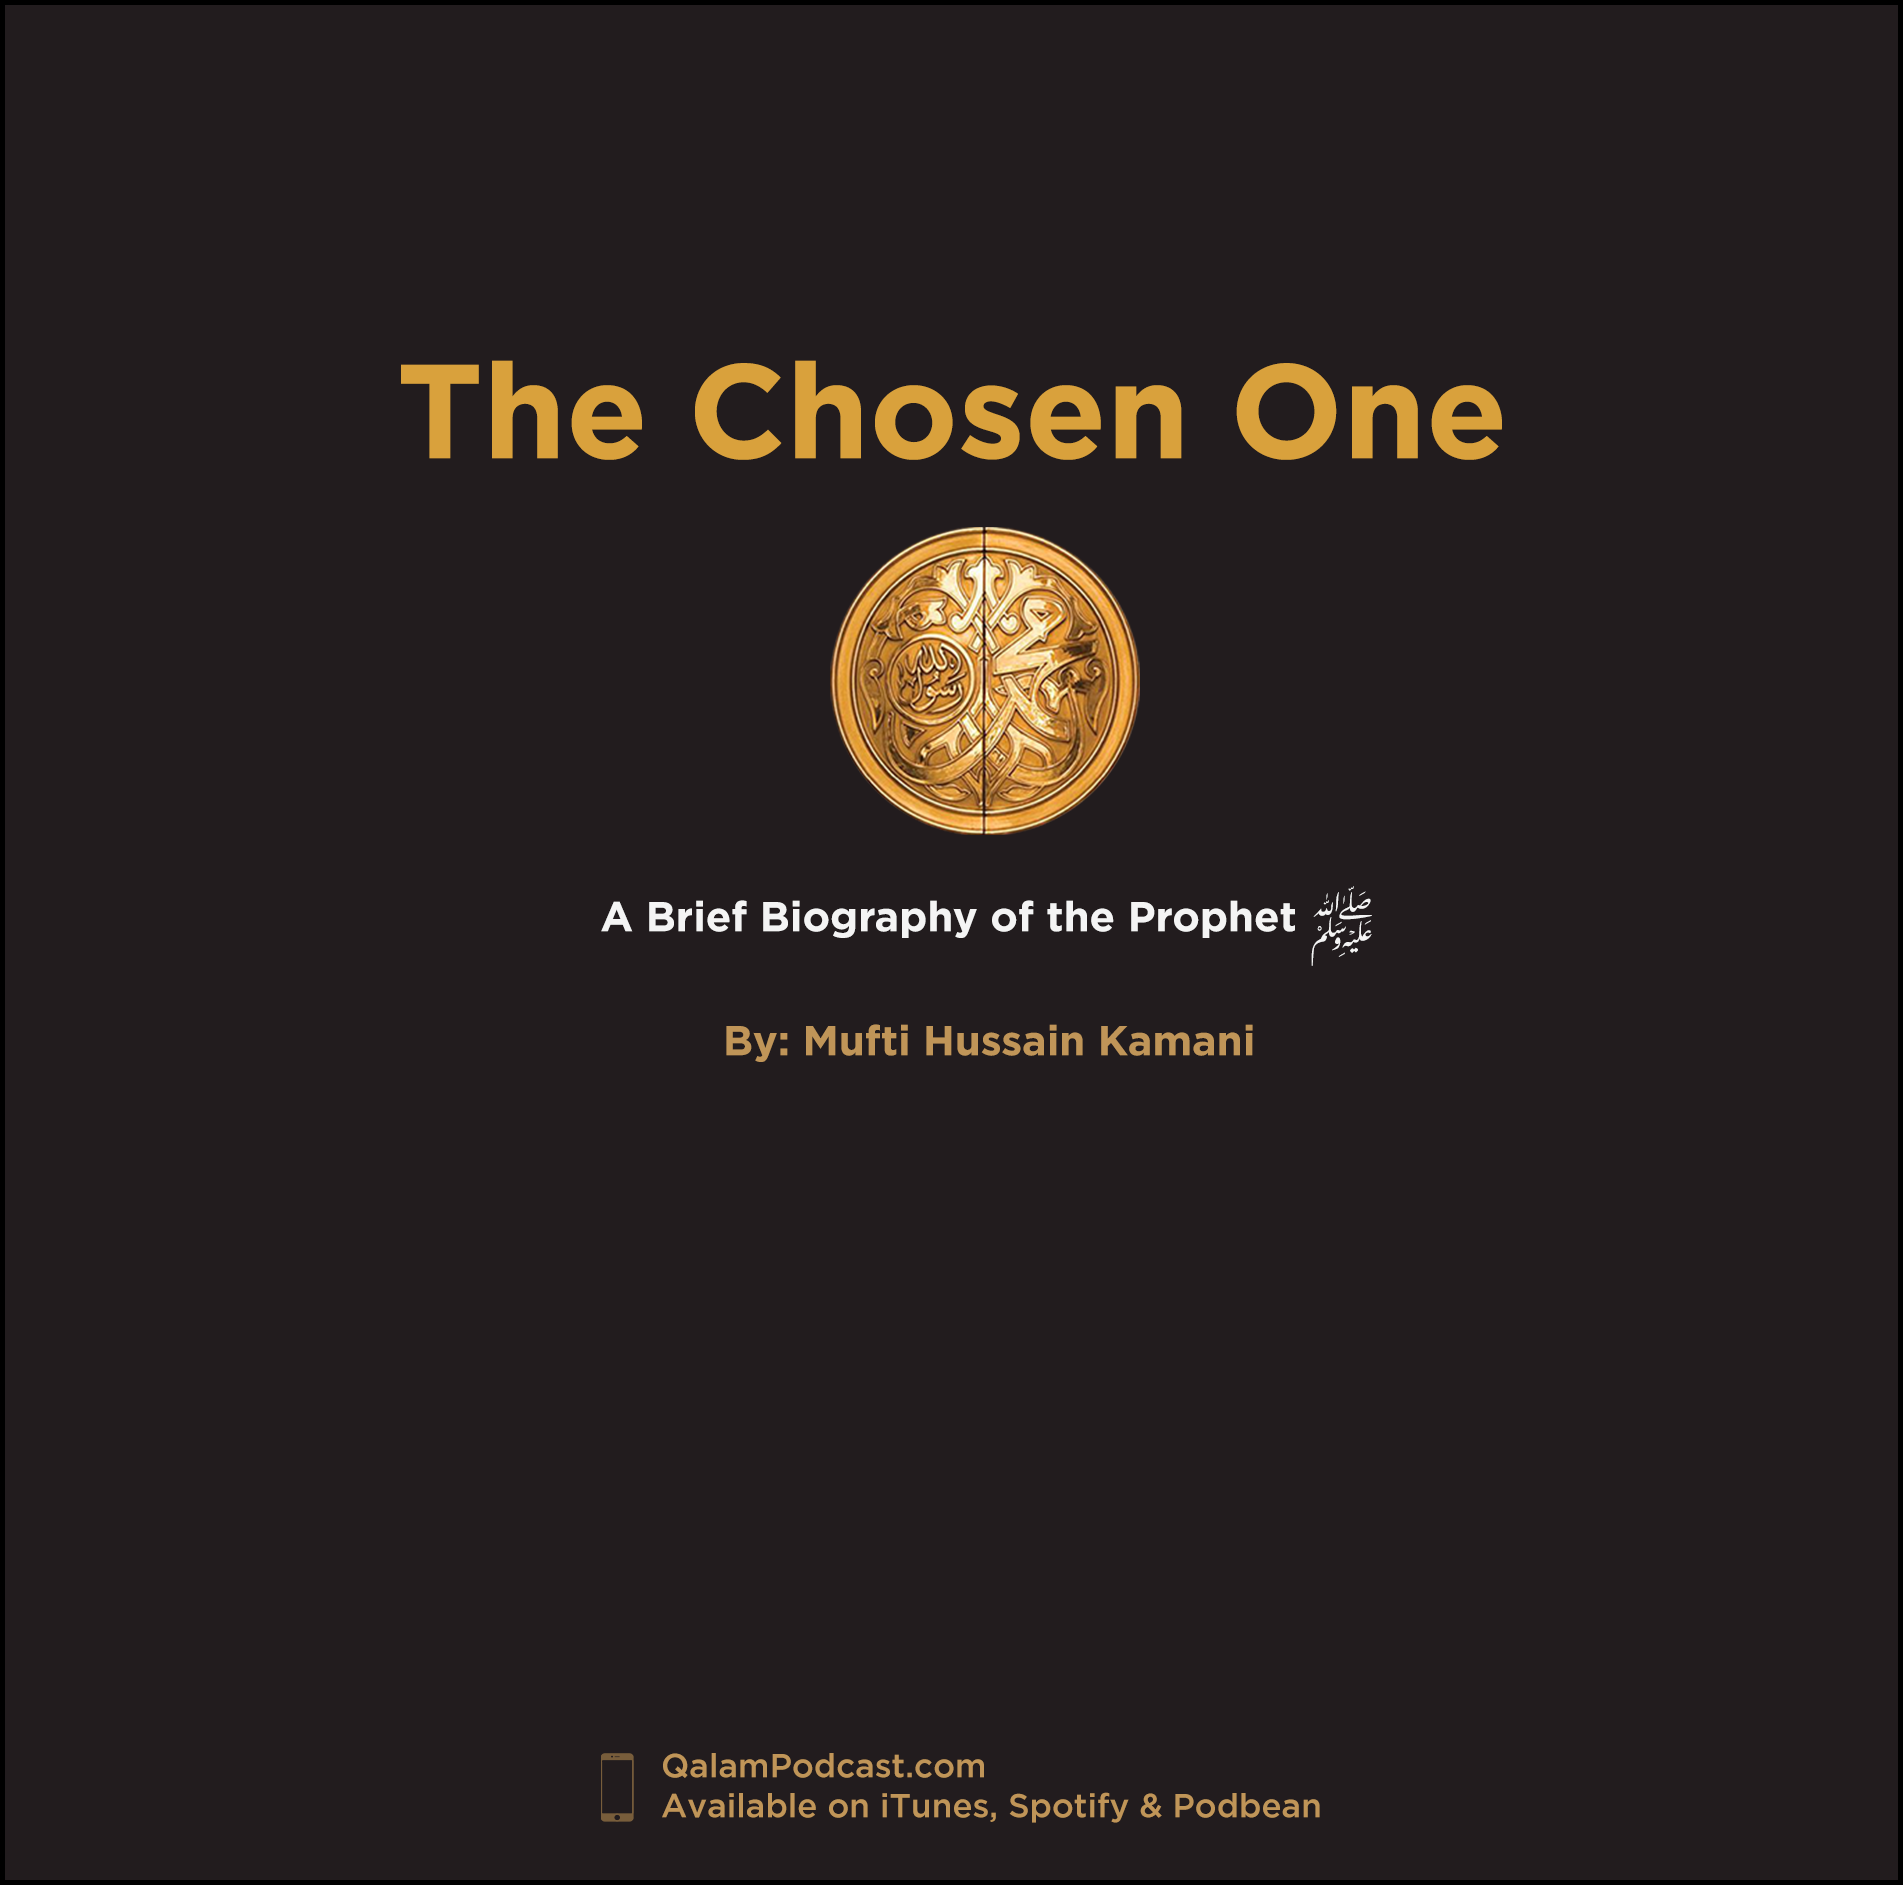 The Chosen One – The Treaty of Hudaibiya